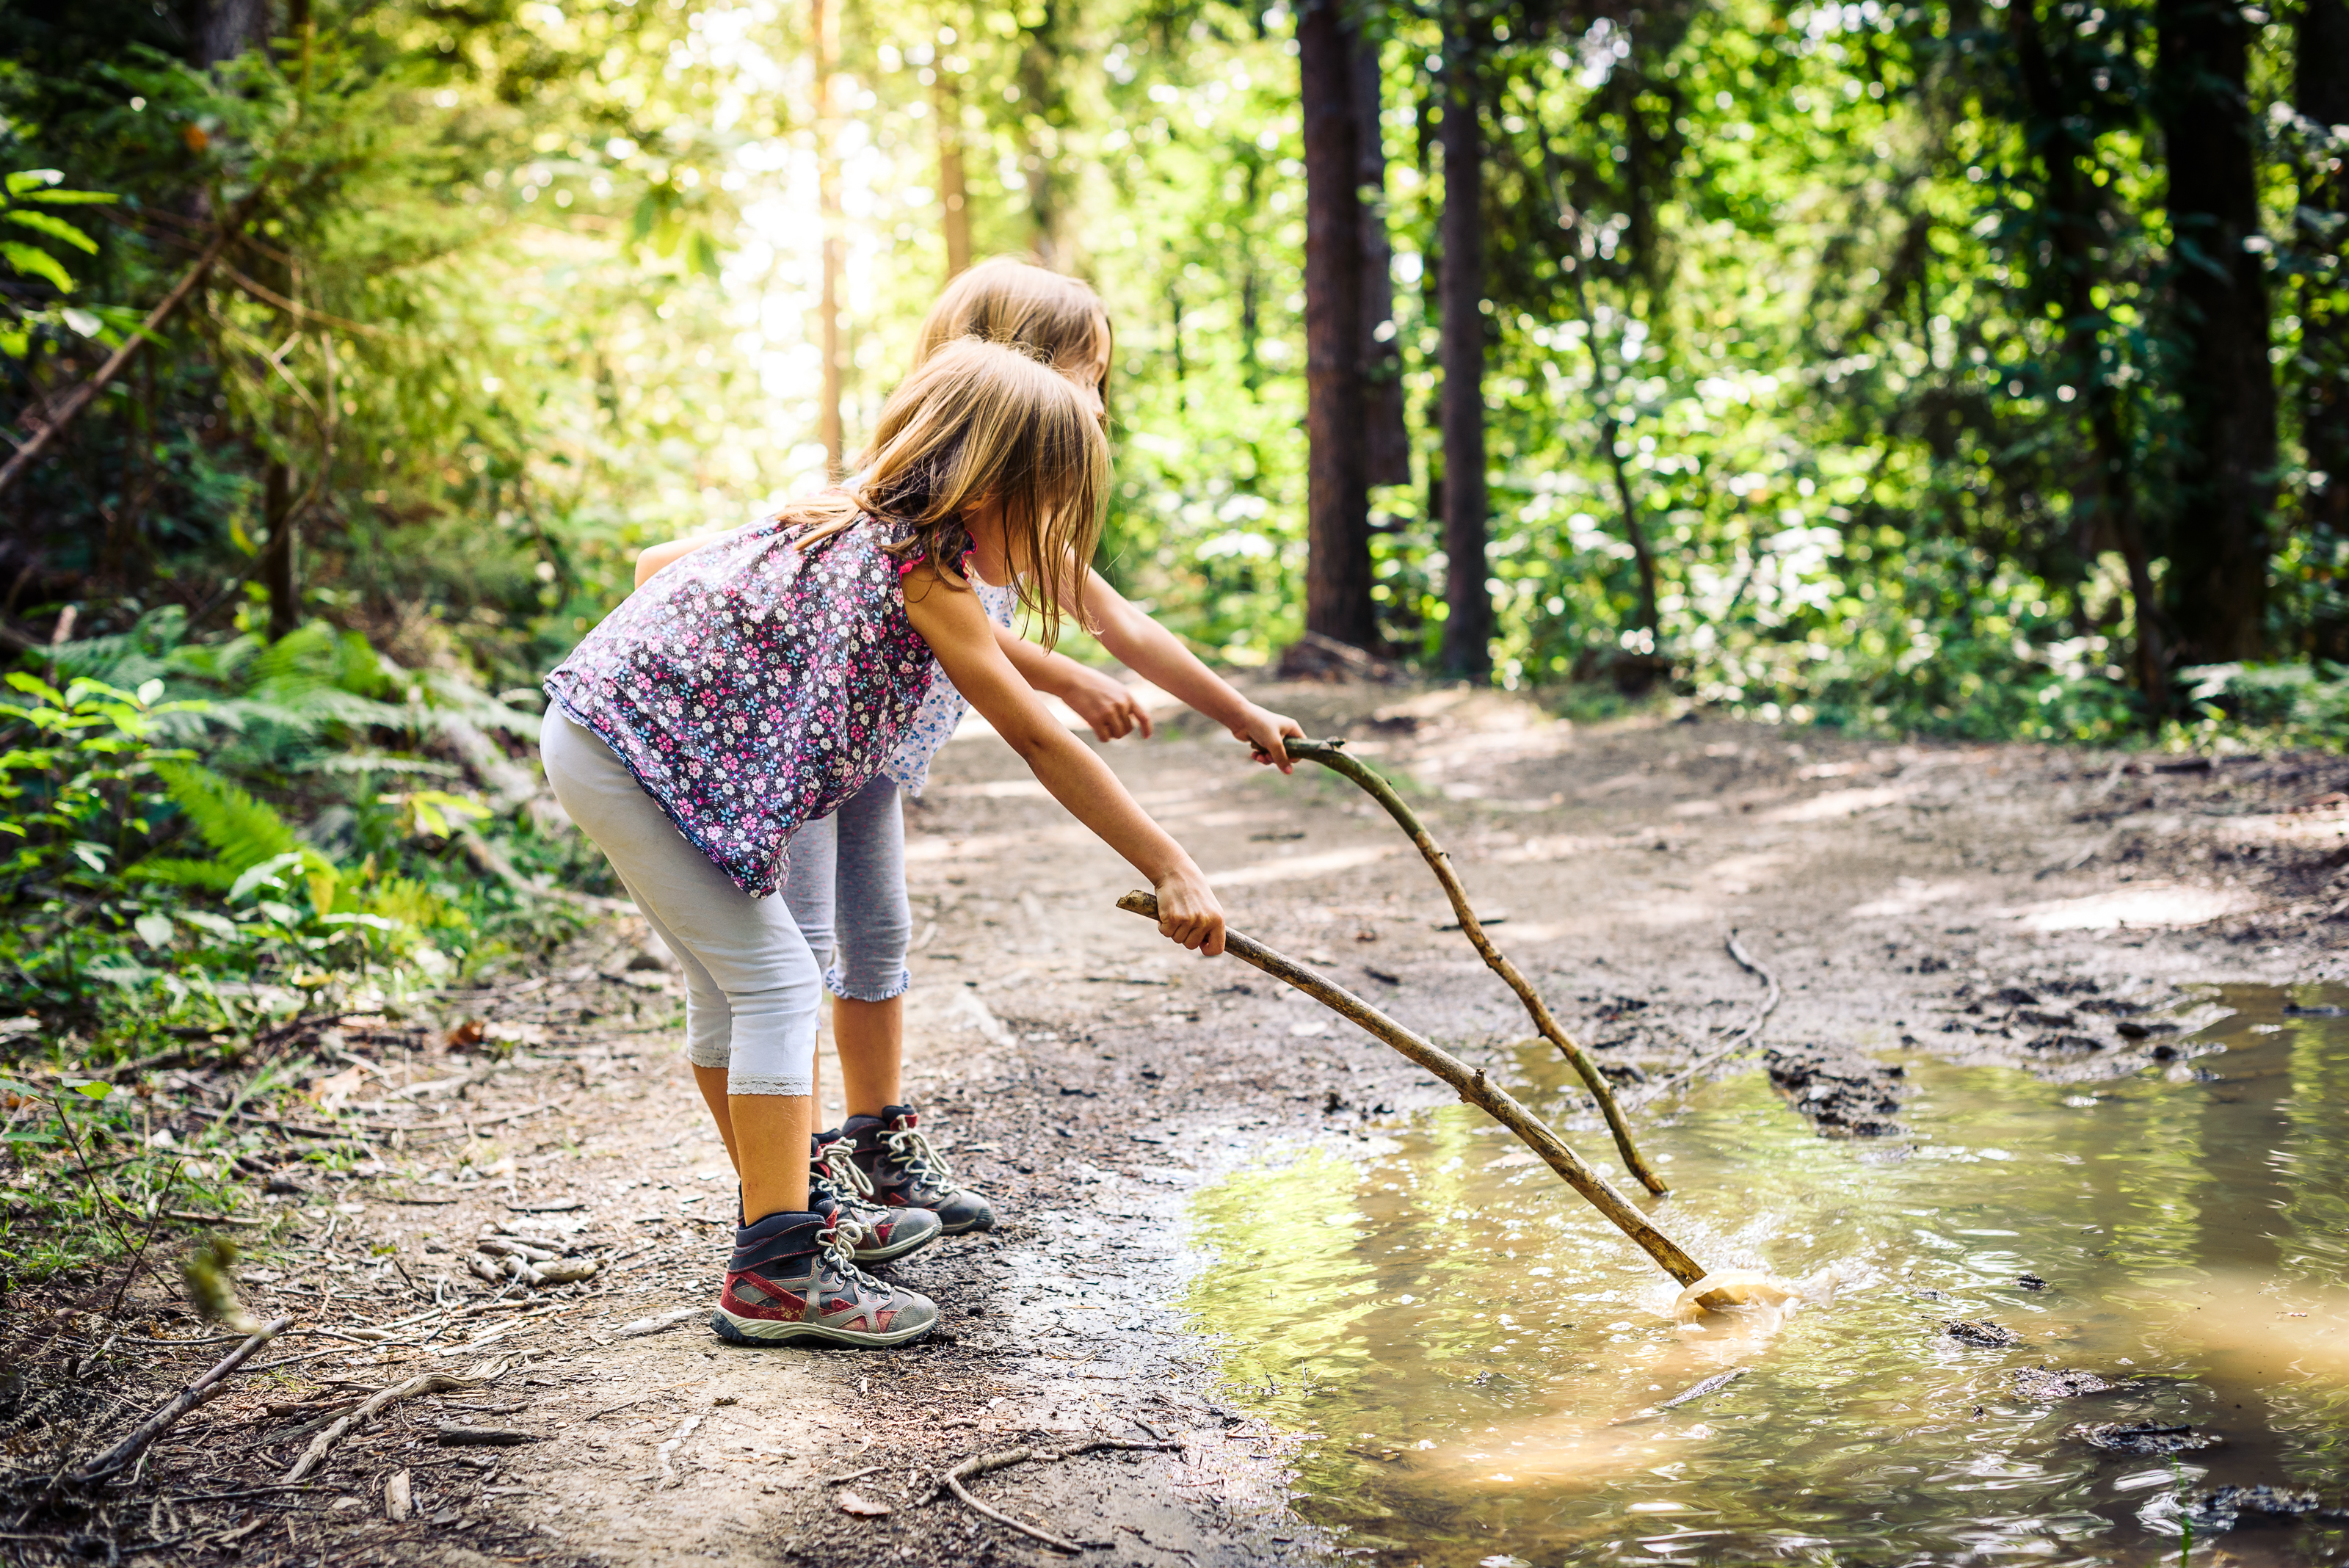 kids in woods, poking sticks into water